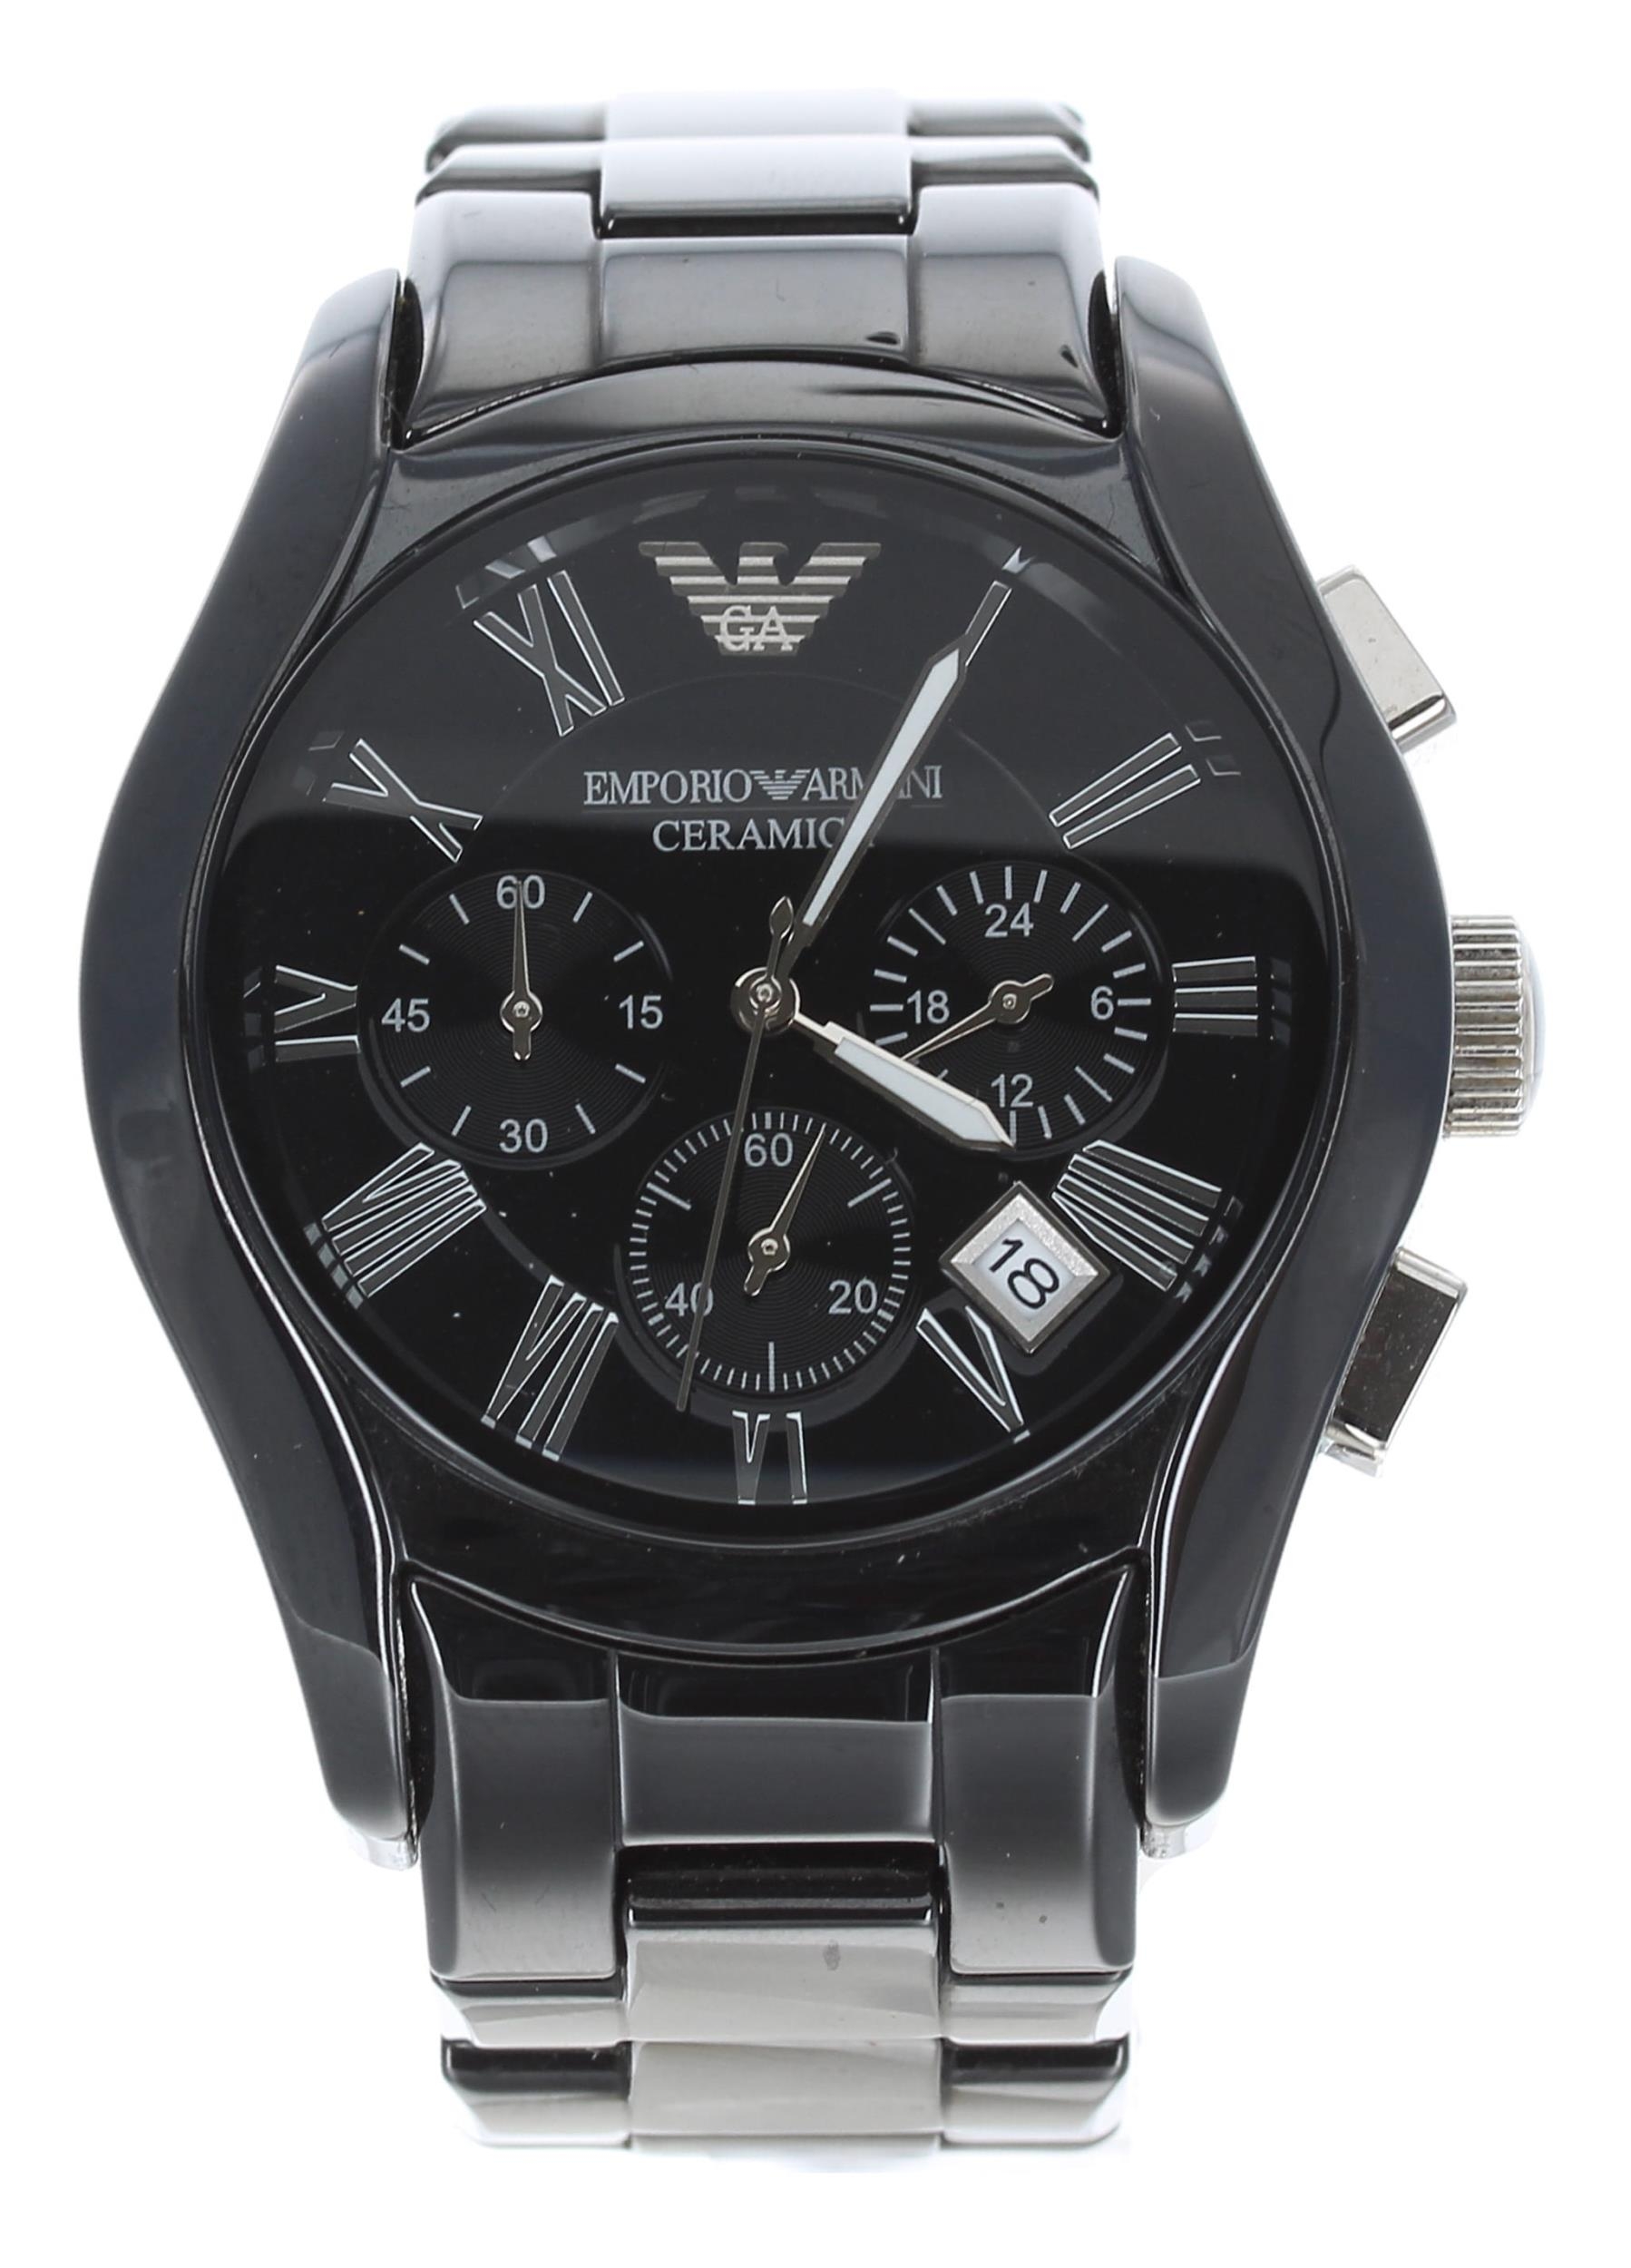 Emporio Armani Ceramica chronograph gentleman's wristwatch, reference ...